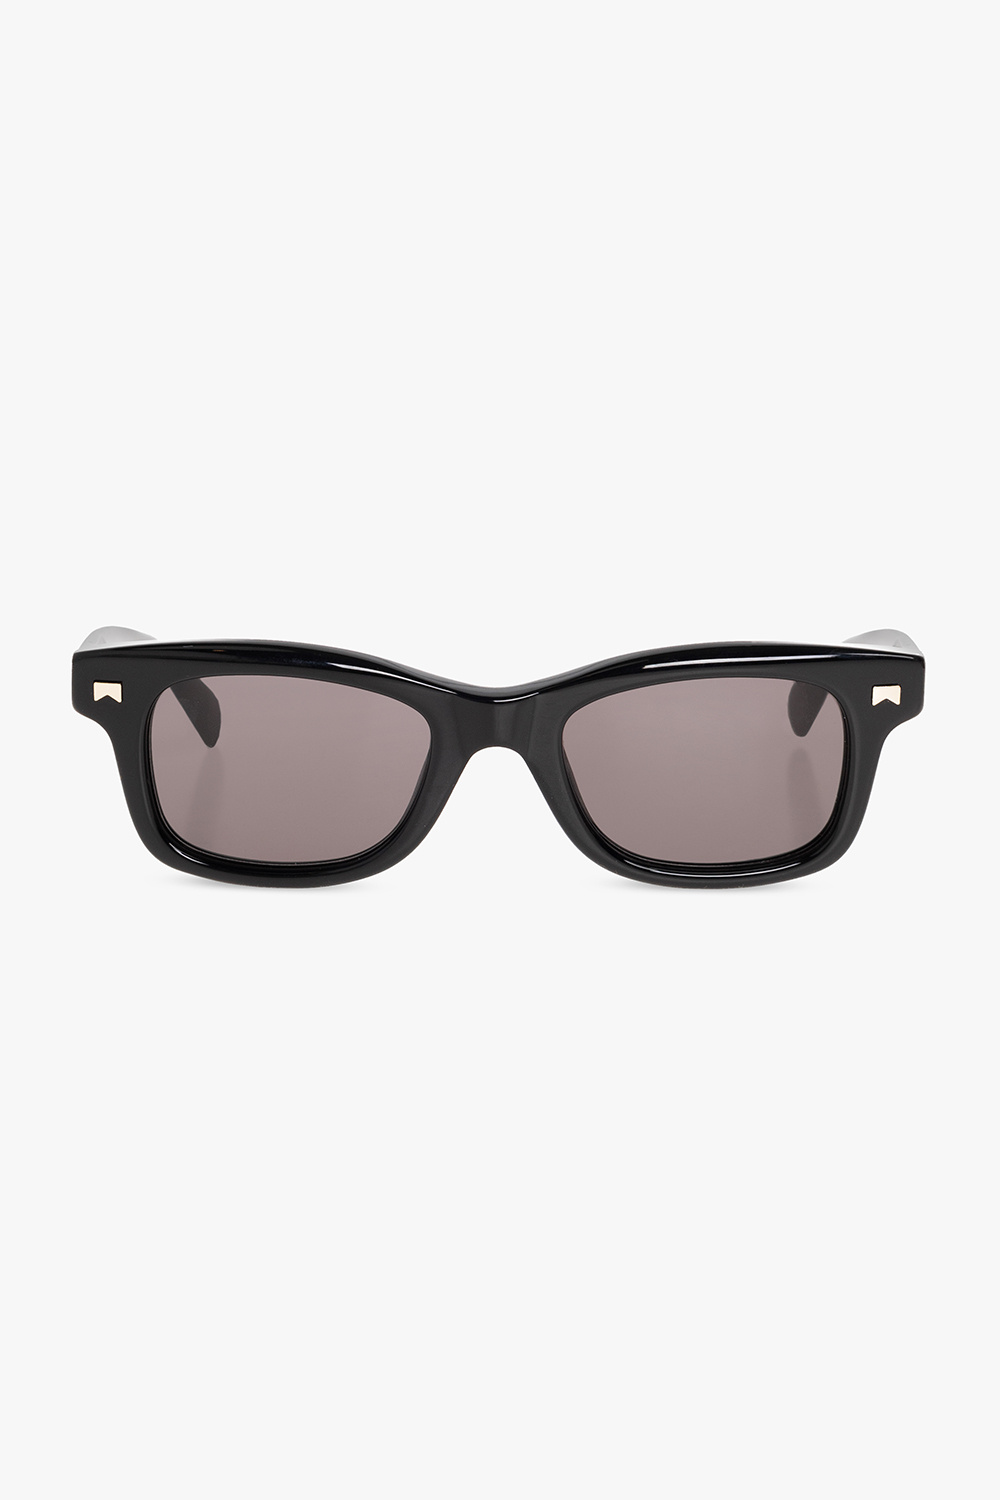 Sun Rhay' sunglasses - gentle monster miomio 032b item IetpShops Singapore